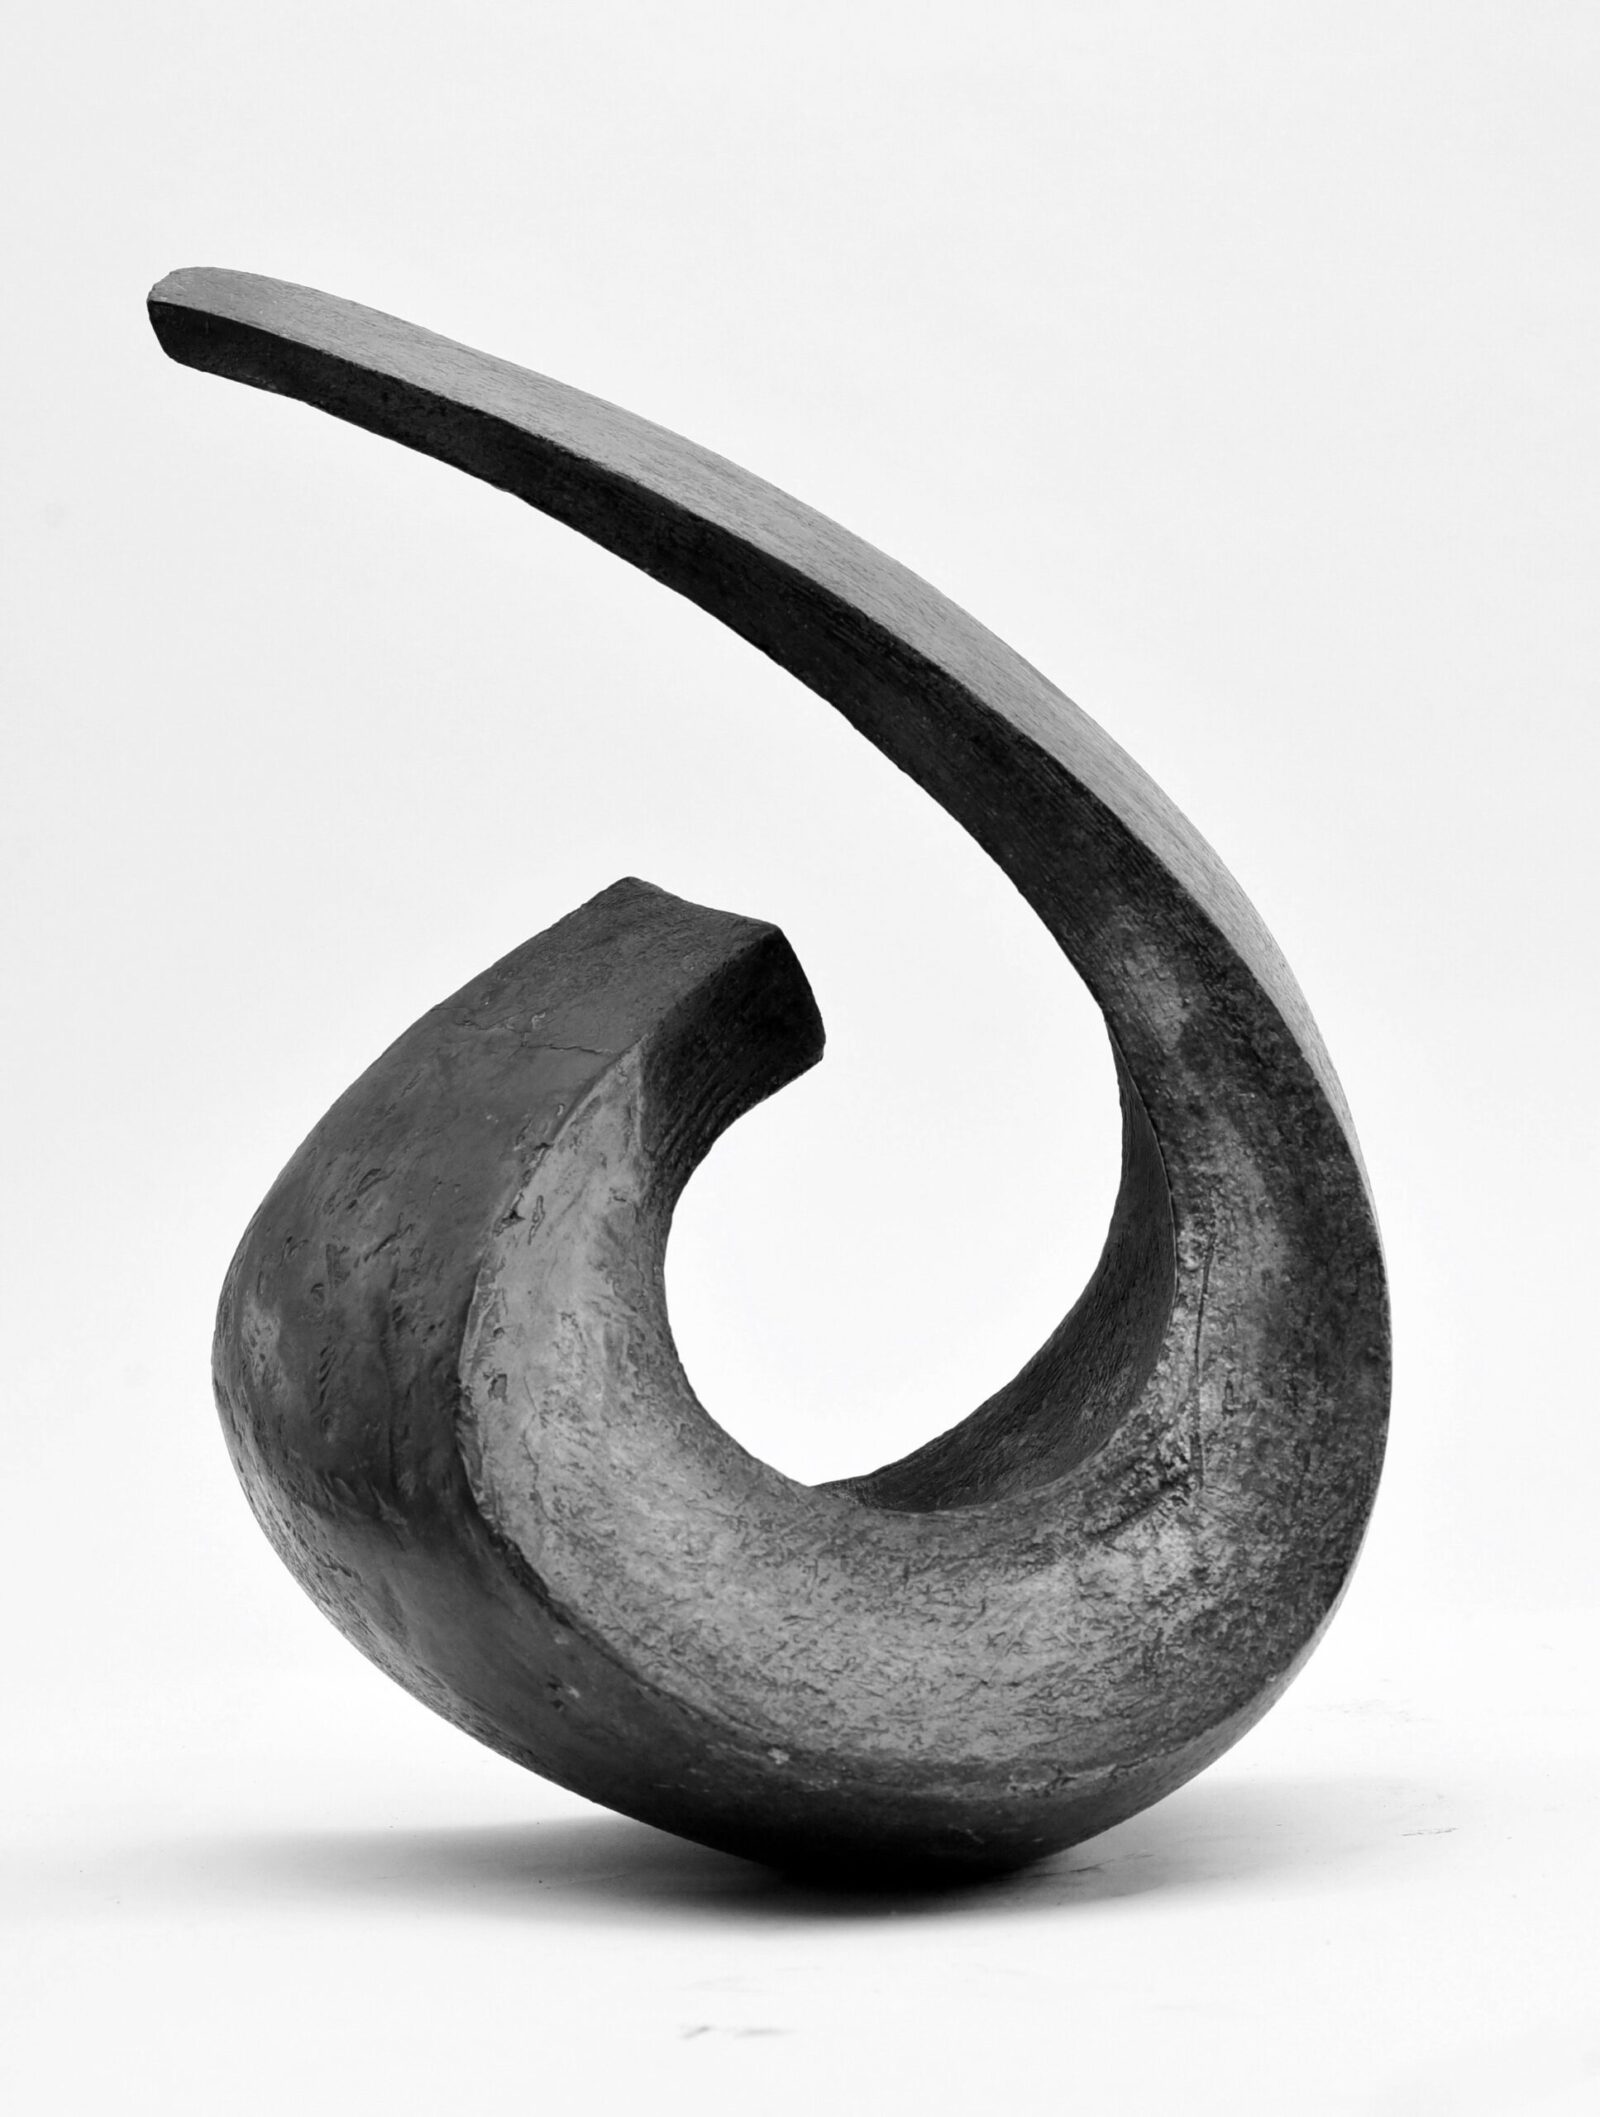 Abstract spiral sculpture for interior design and garden